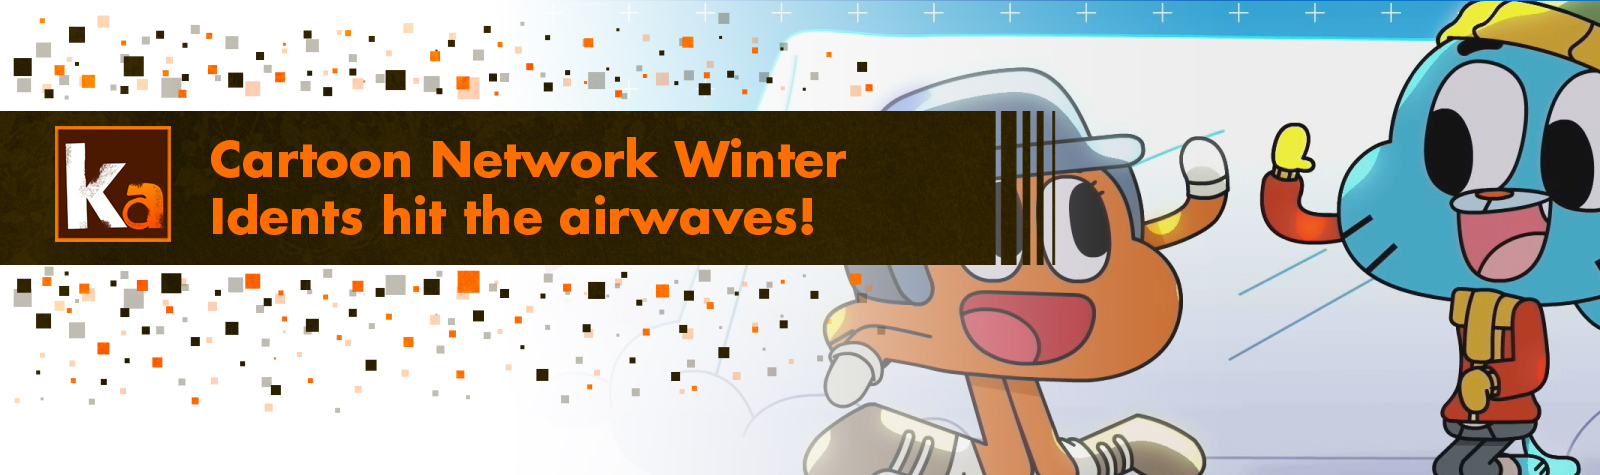 Cartoon Network Winter Idents hit the airwaves!